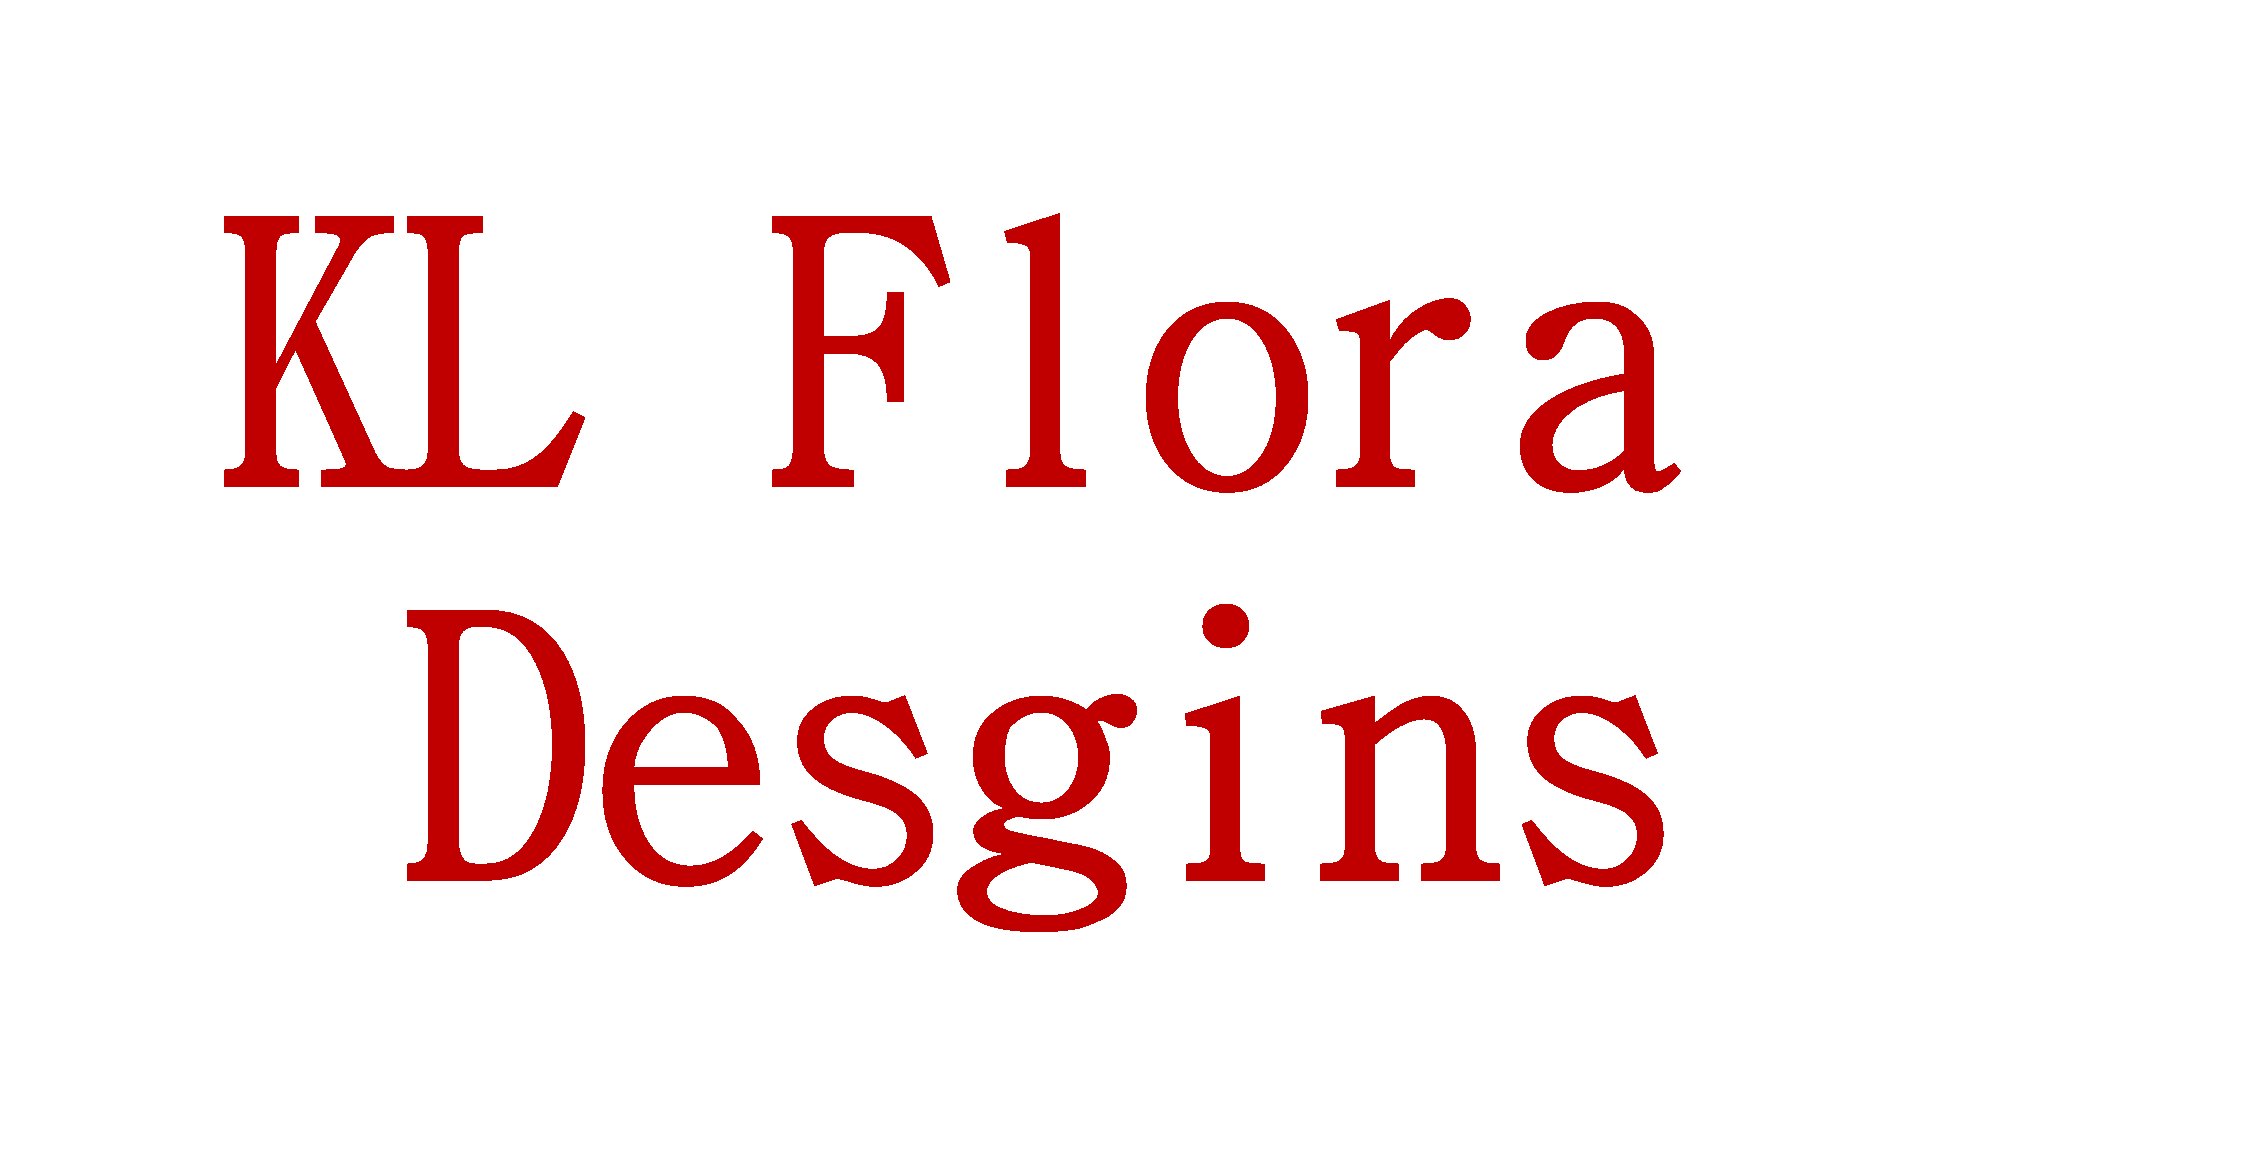 KL Flora Designs Pointe-Claire (514)694-9427